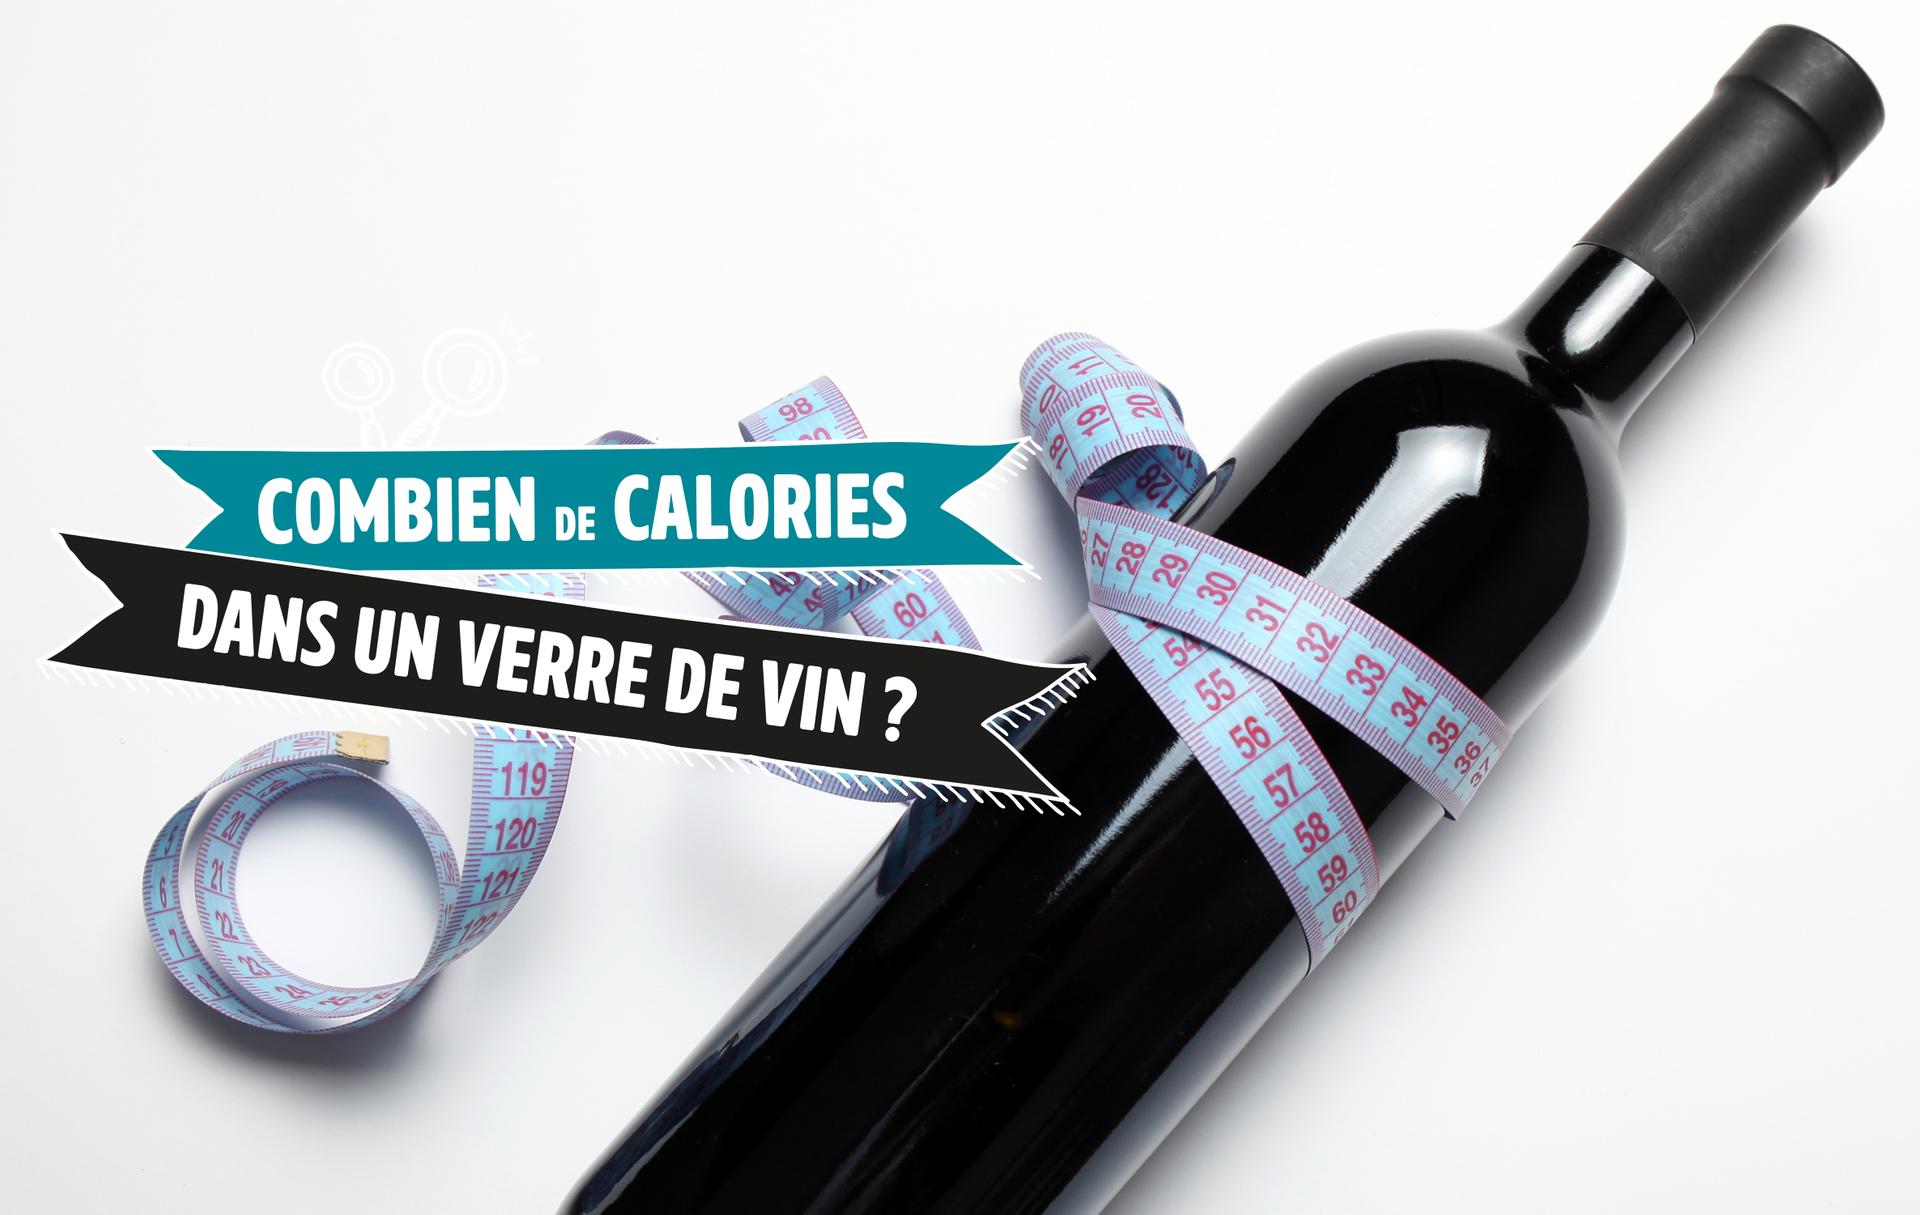 Combien de calories contient un verre de vin ?